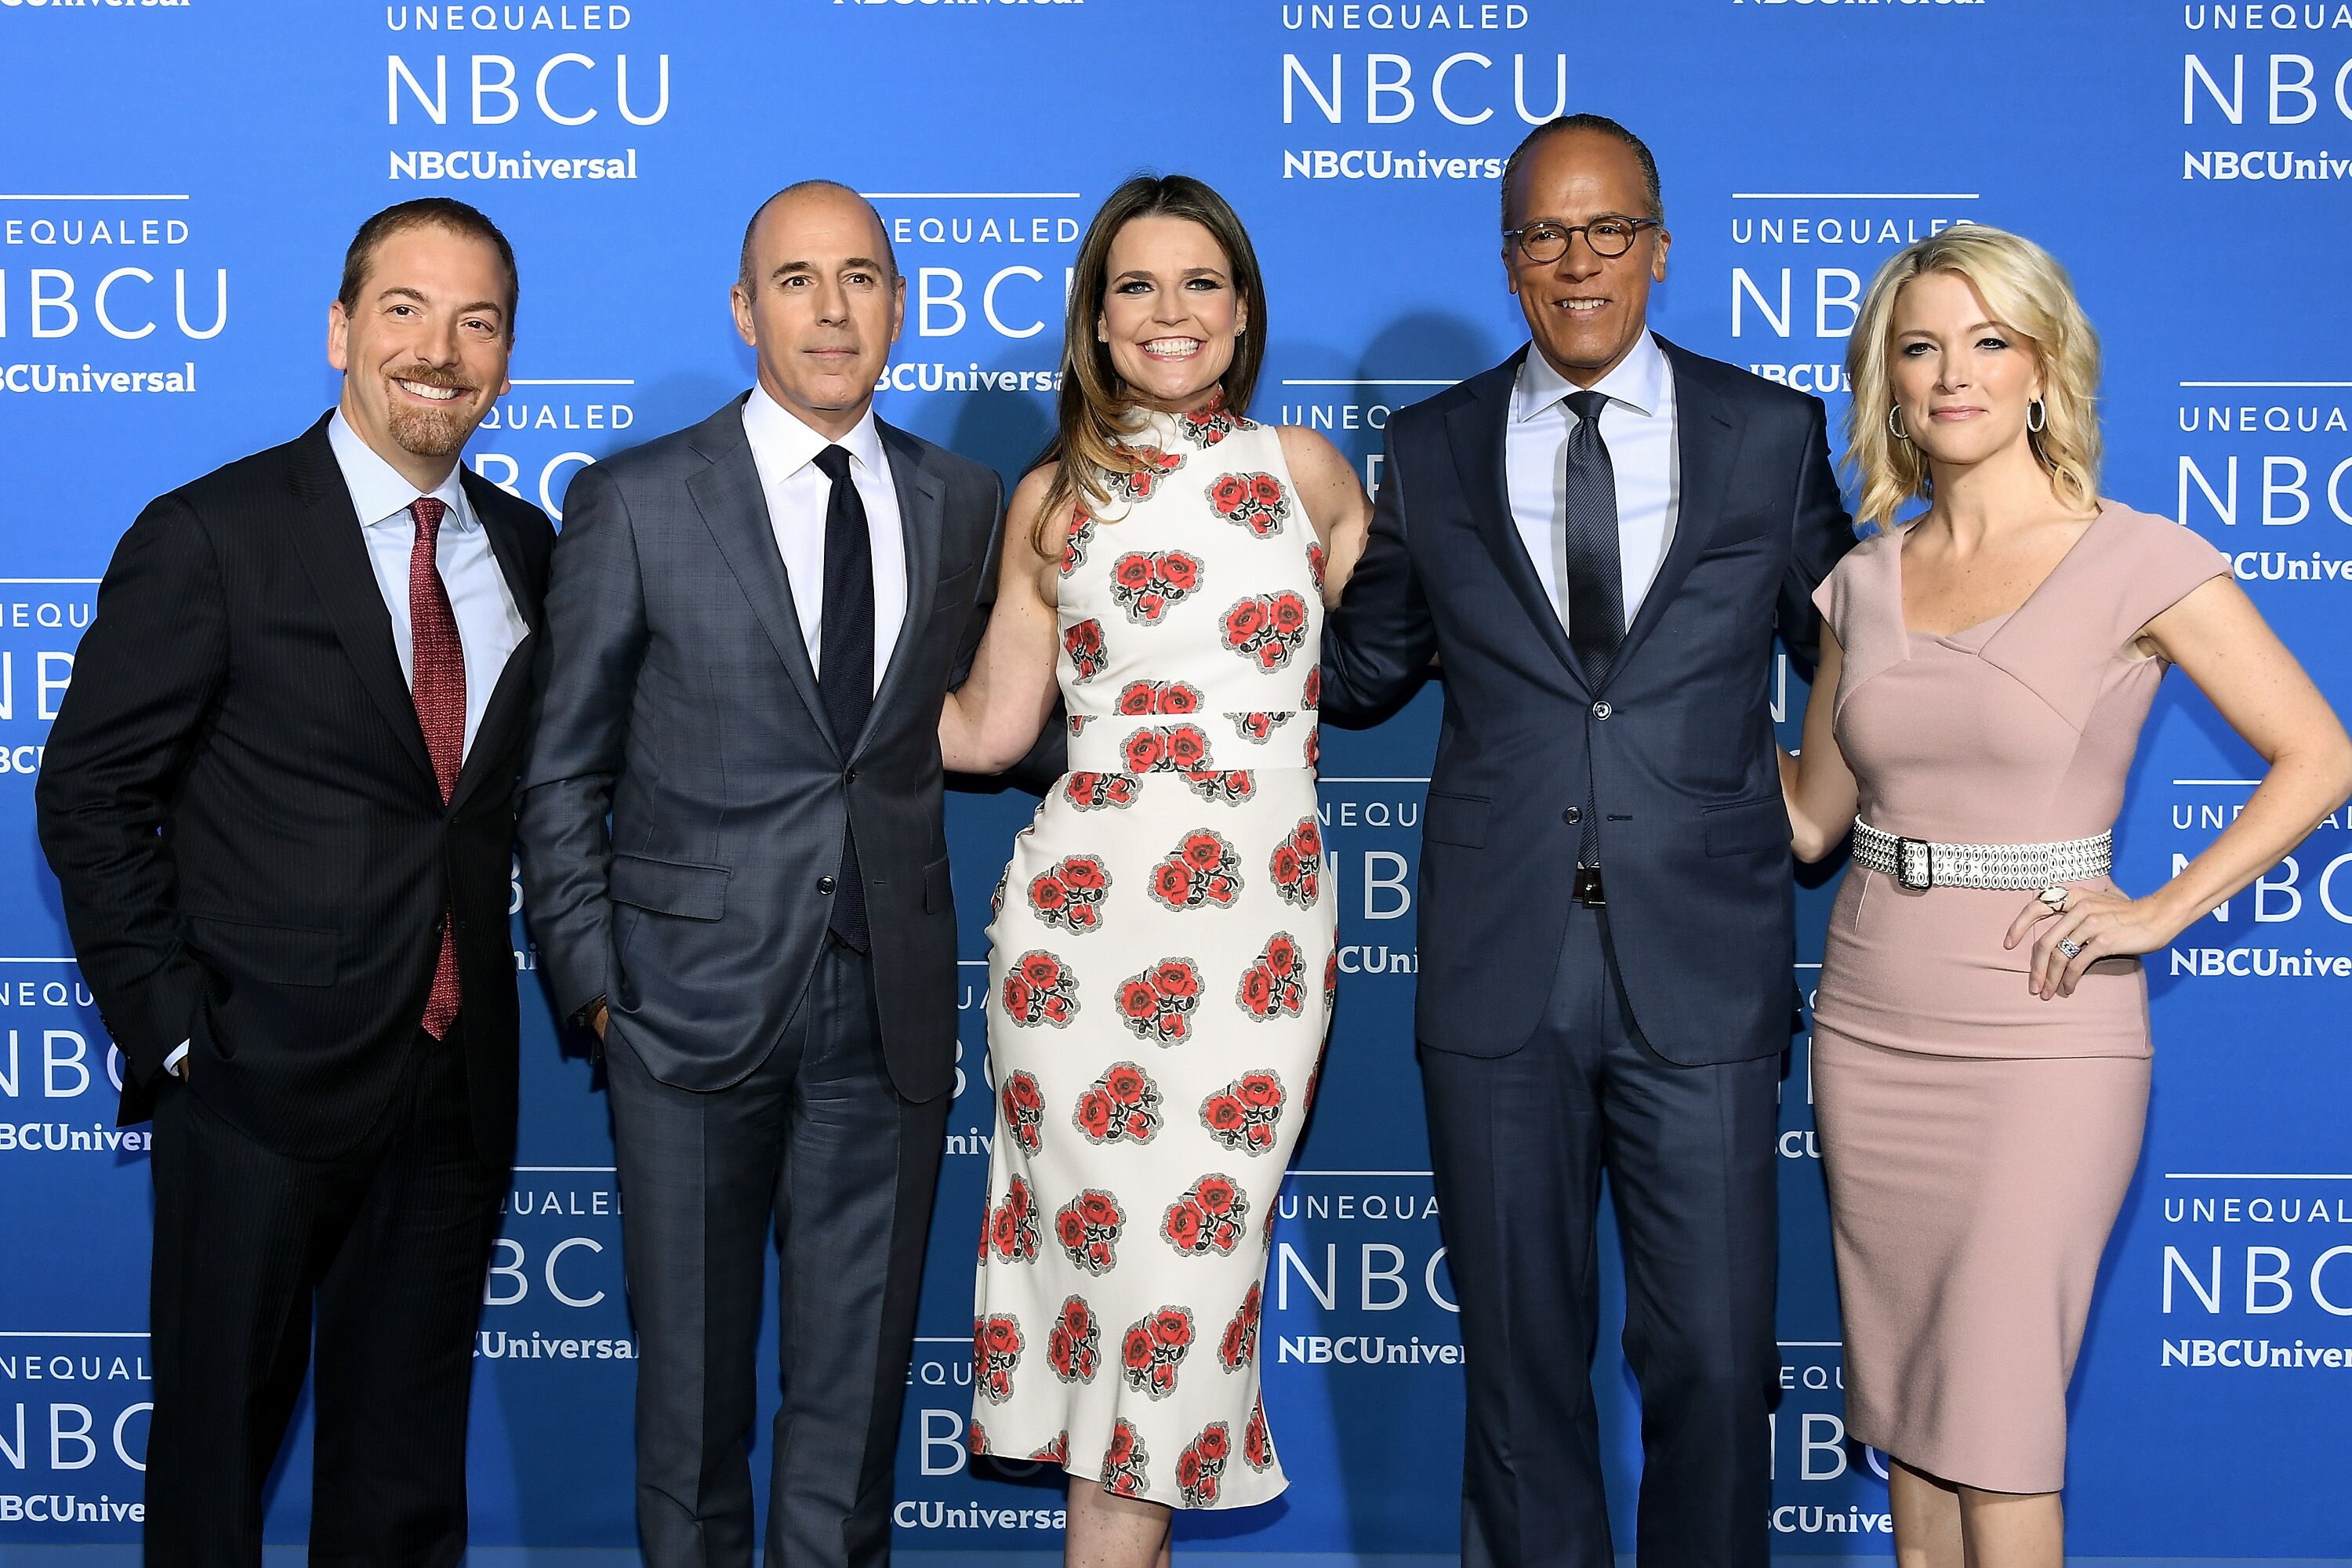 Chuck Todd, Matt Lauer, Savannah Guthrie, Lester Holt, and Megyn Kelly attend the 2017 NBCUniversal Upfront. | Source: Getty Images